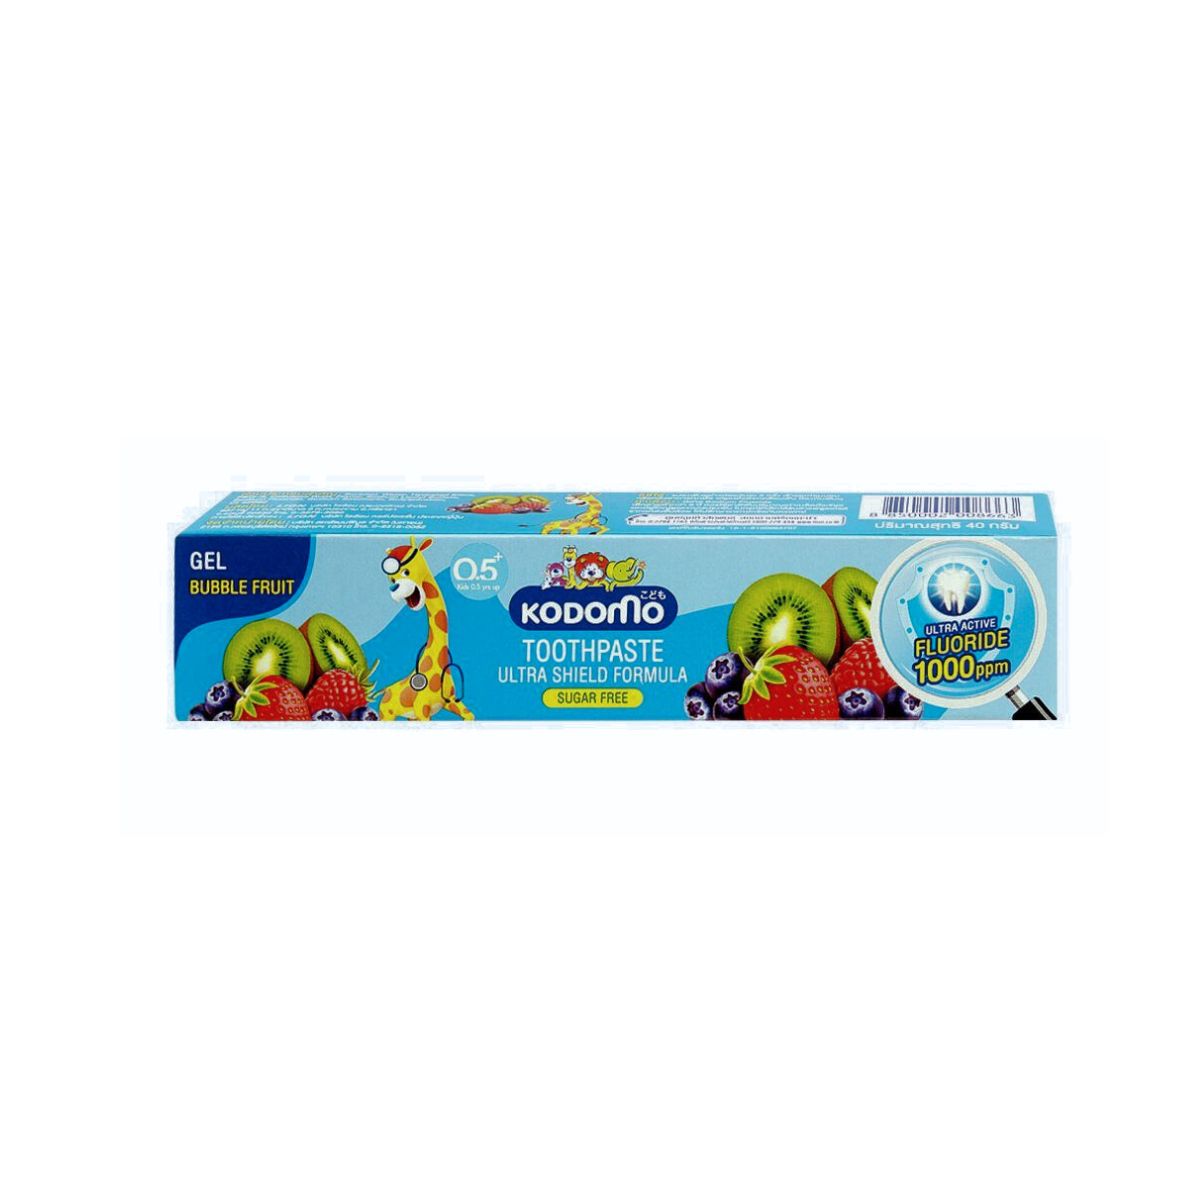 Kodomo Toothpaste Ultra Shield Formula - Sugar Free - Gel Bubble Fruit